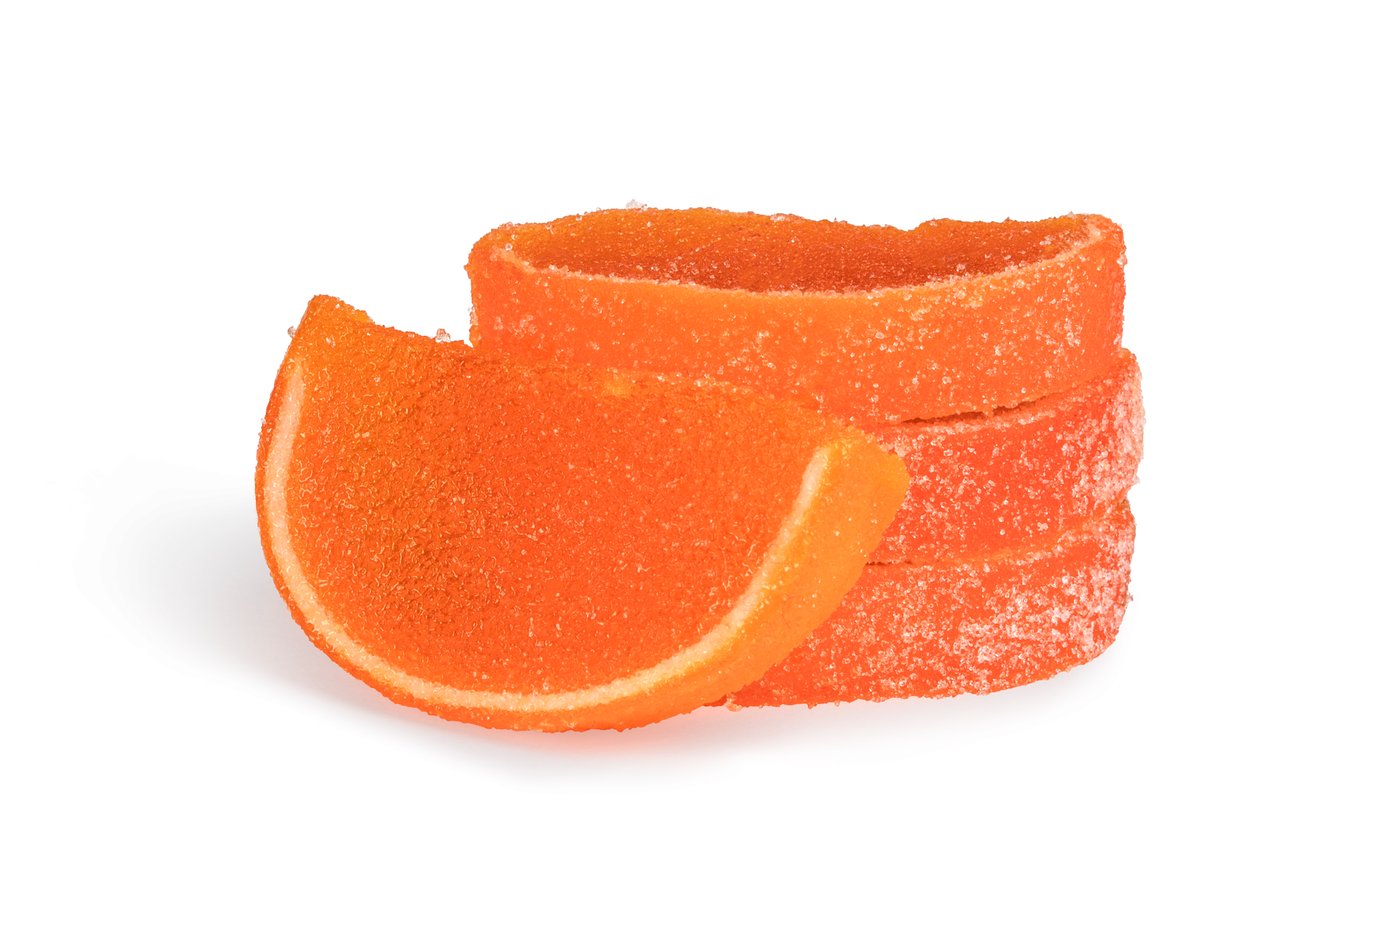 Peach Fruit Slices image zoom